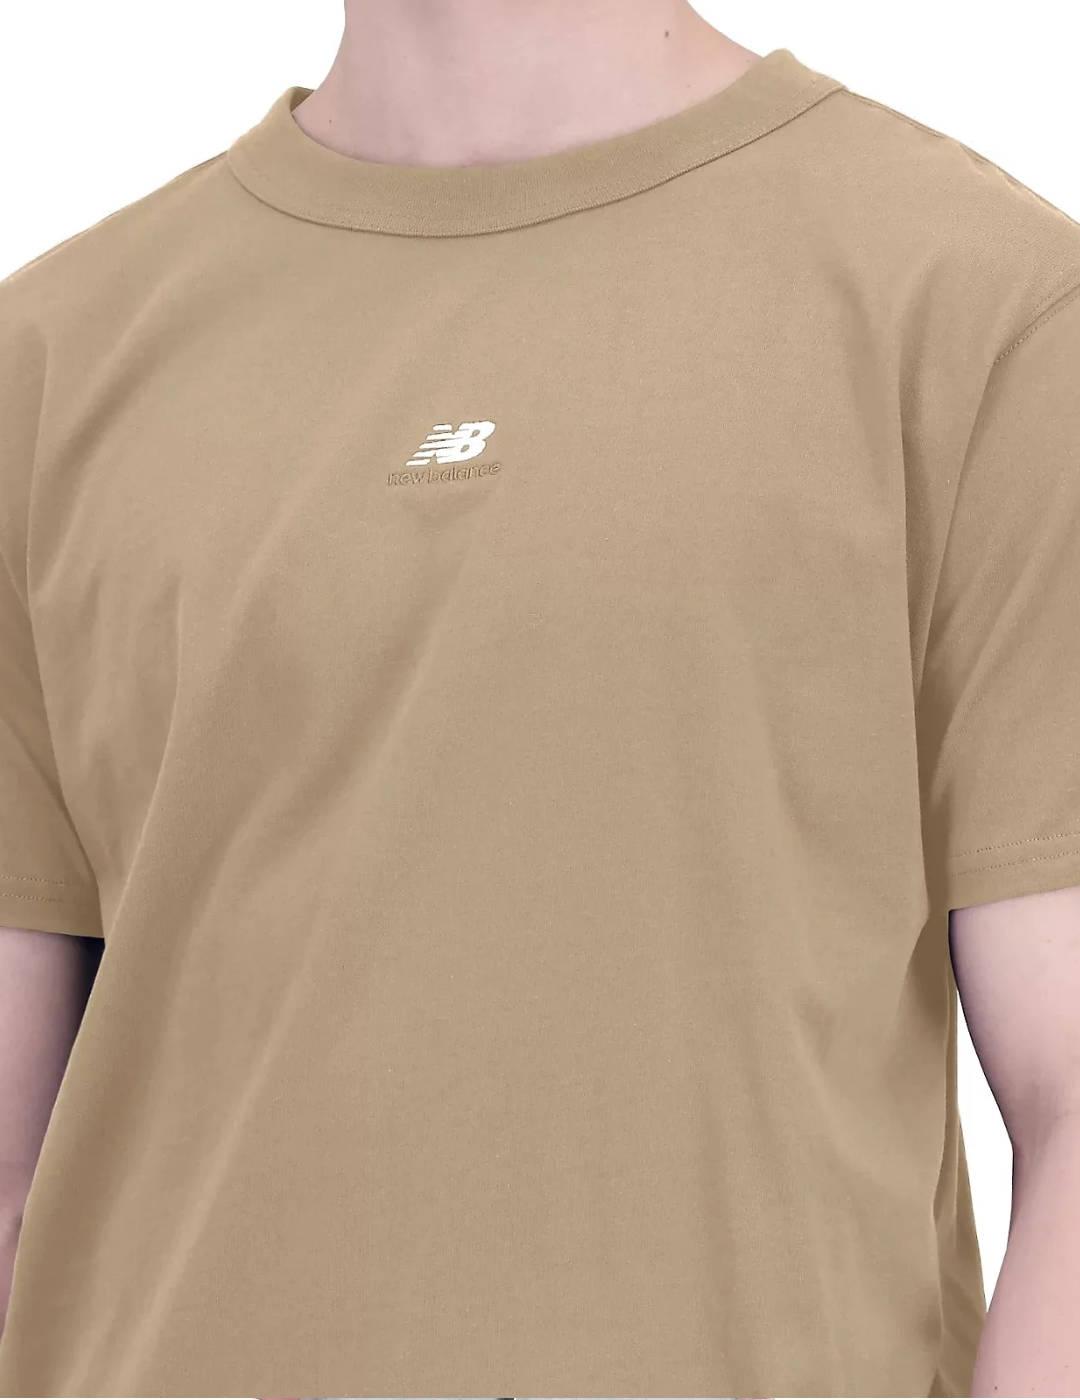 Camiseta New Balance camel manga corta para hombre